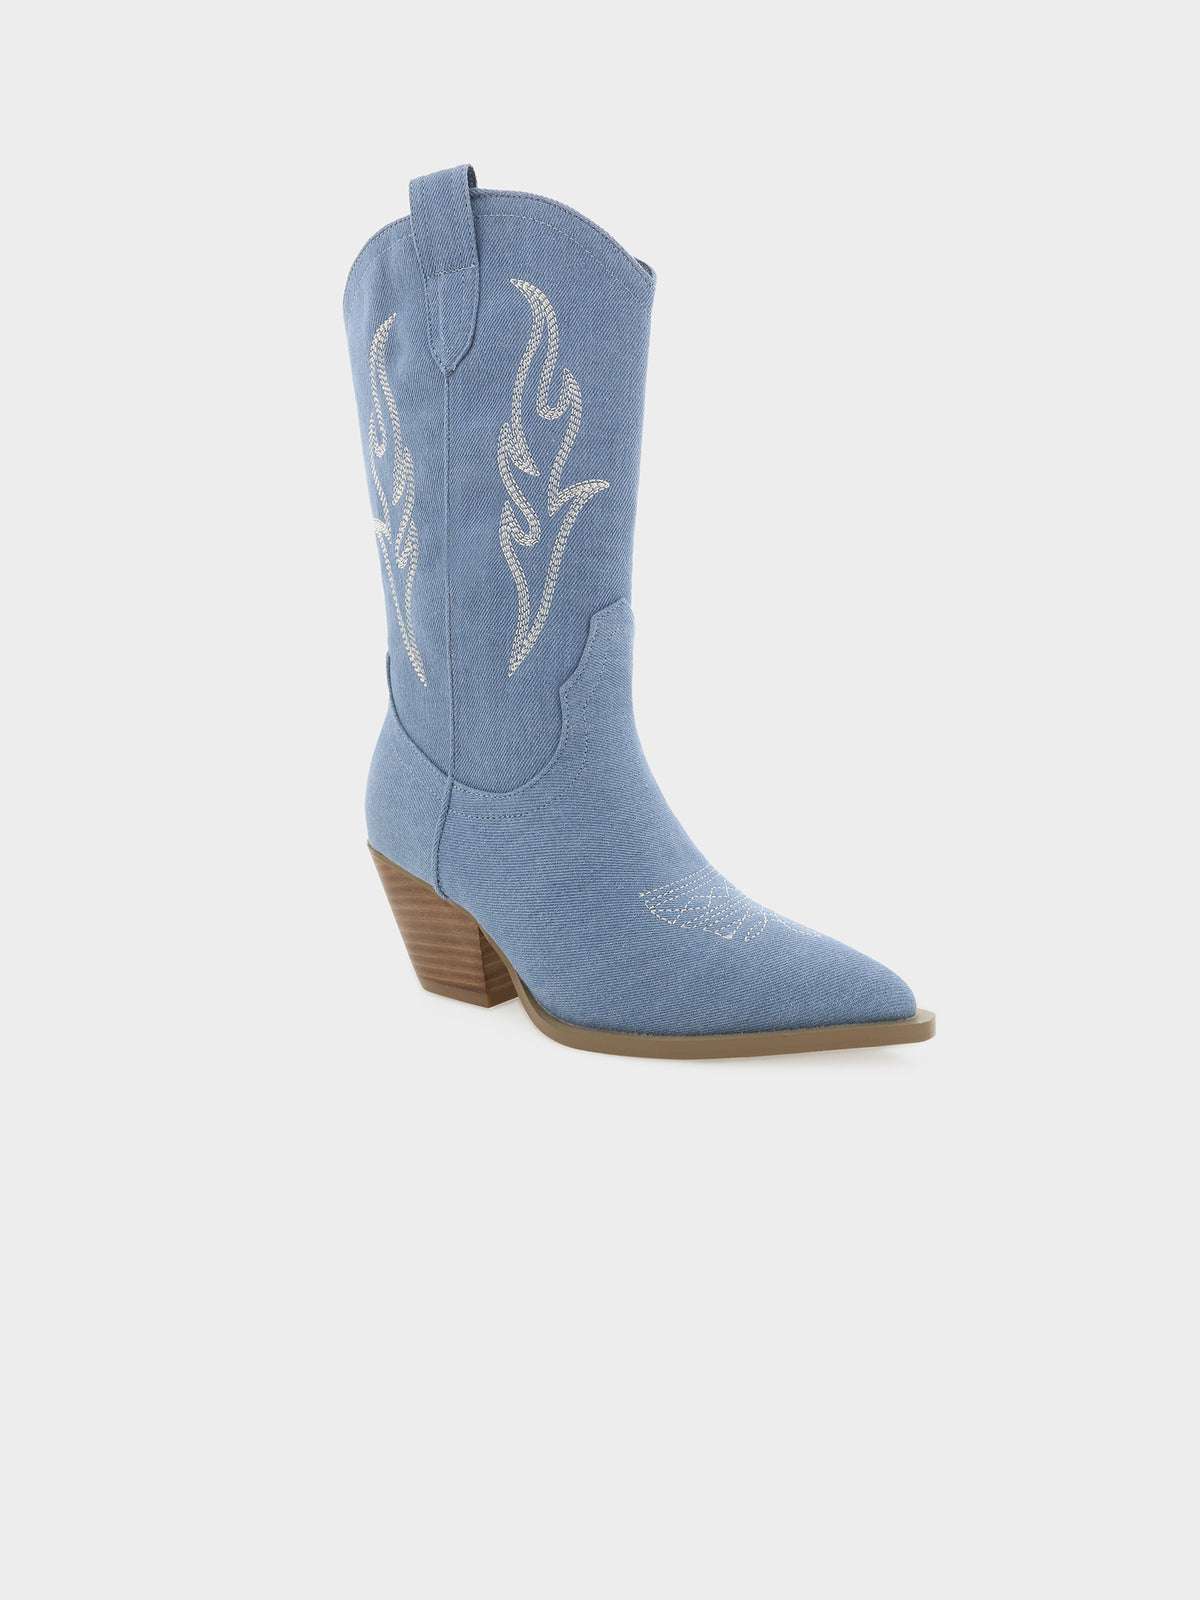 Asha Boots in Blue Denim